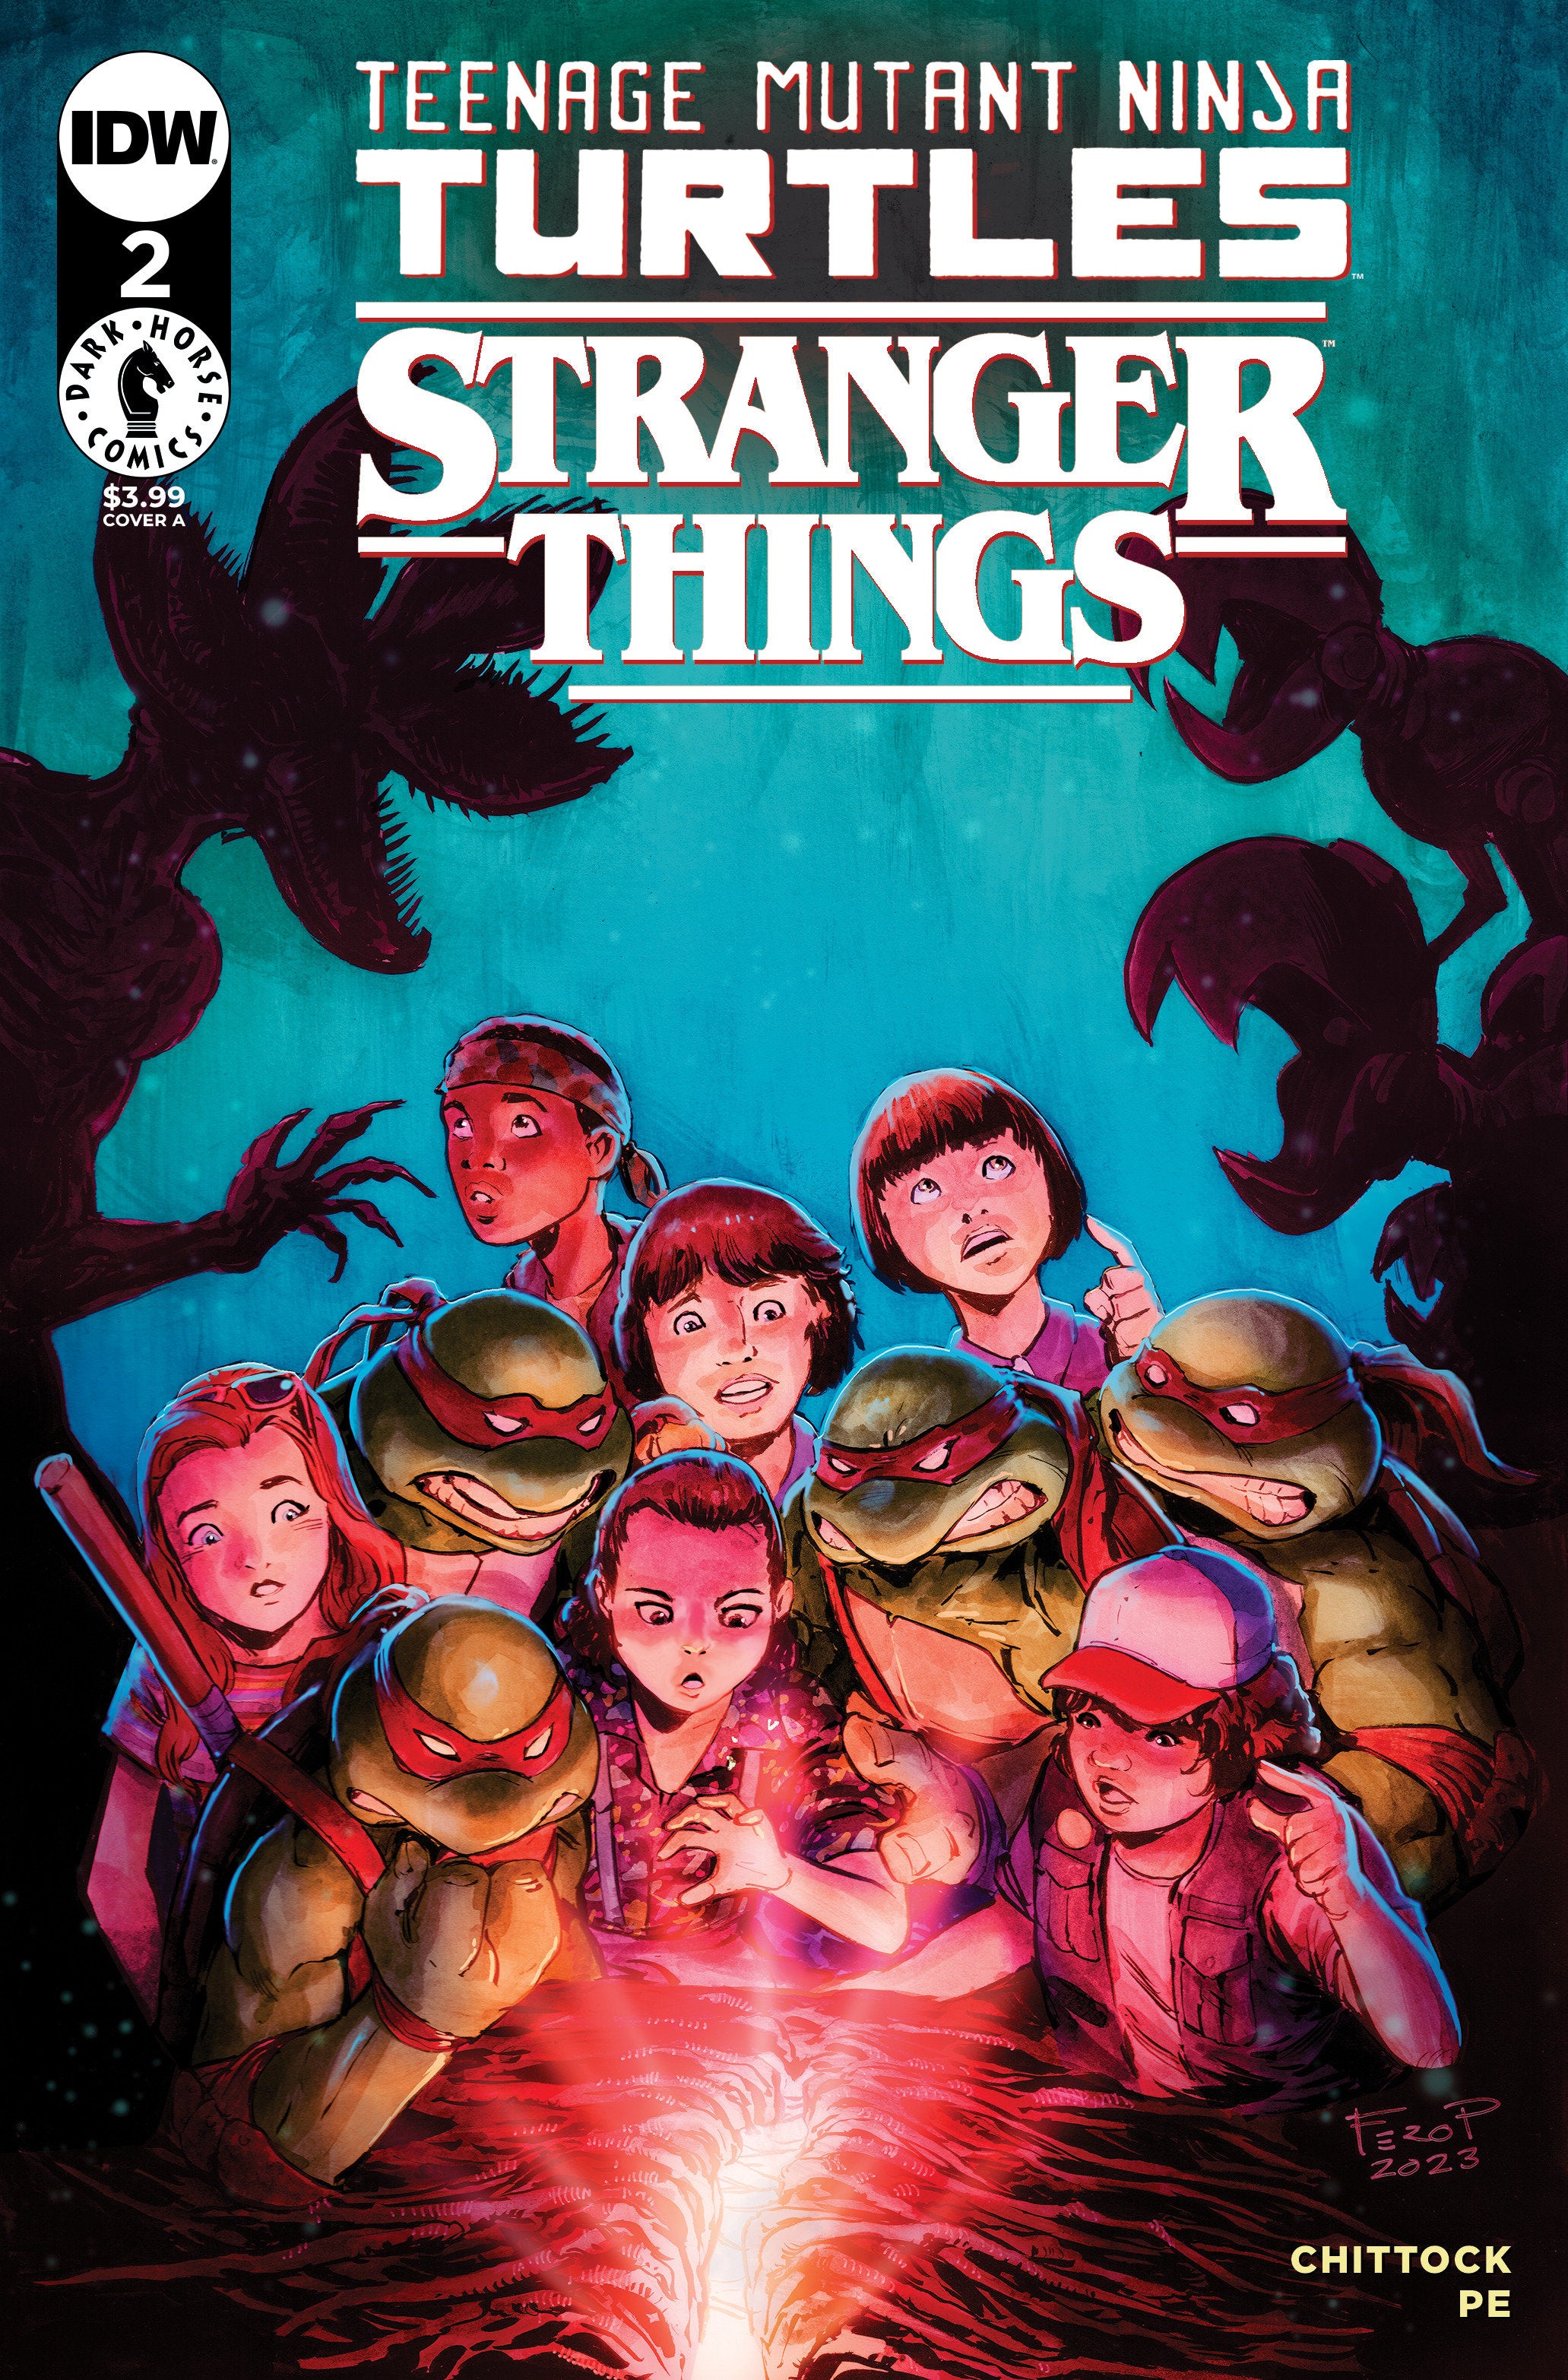 Teenage Mutant Ninja Turtles X Stranger Things #2 Cover A (Pe) | Game Master's Emporium (The New GME)